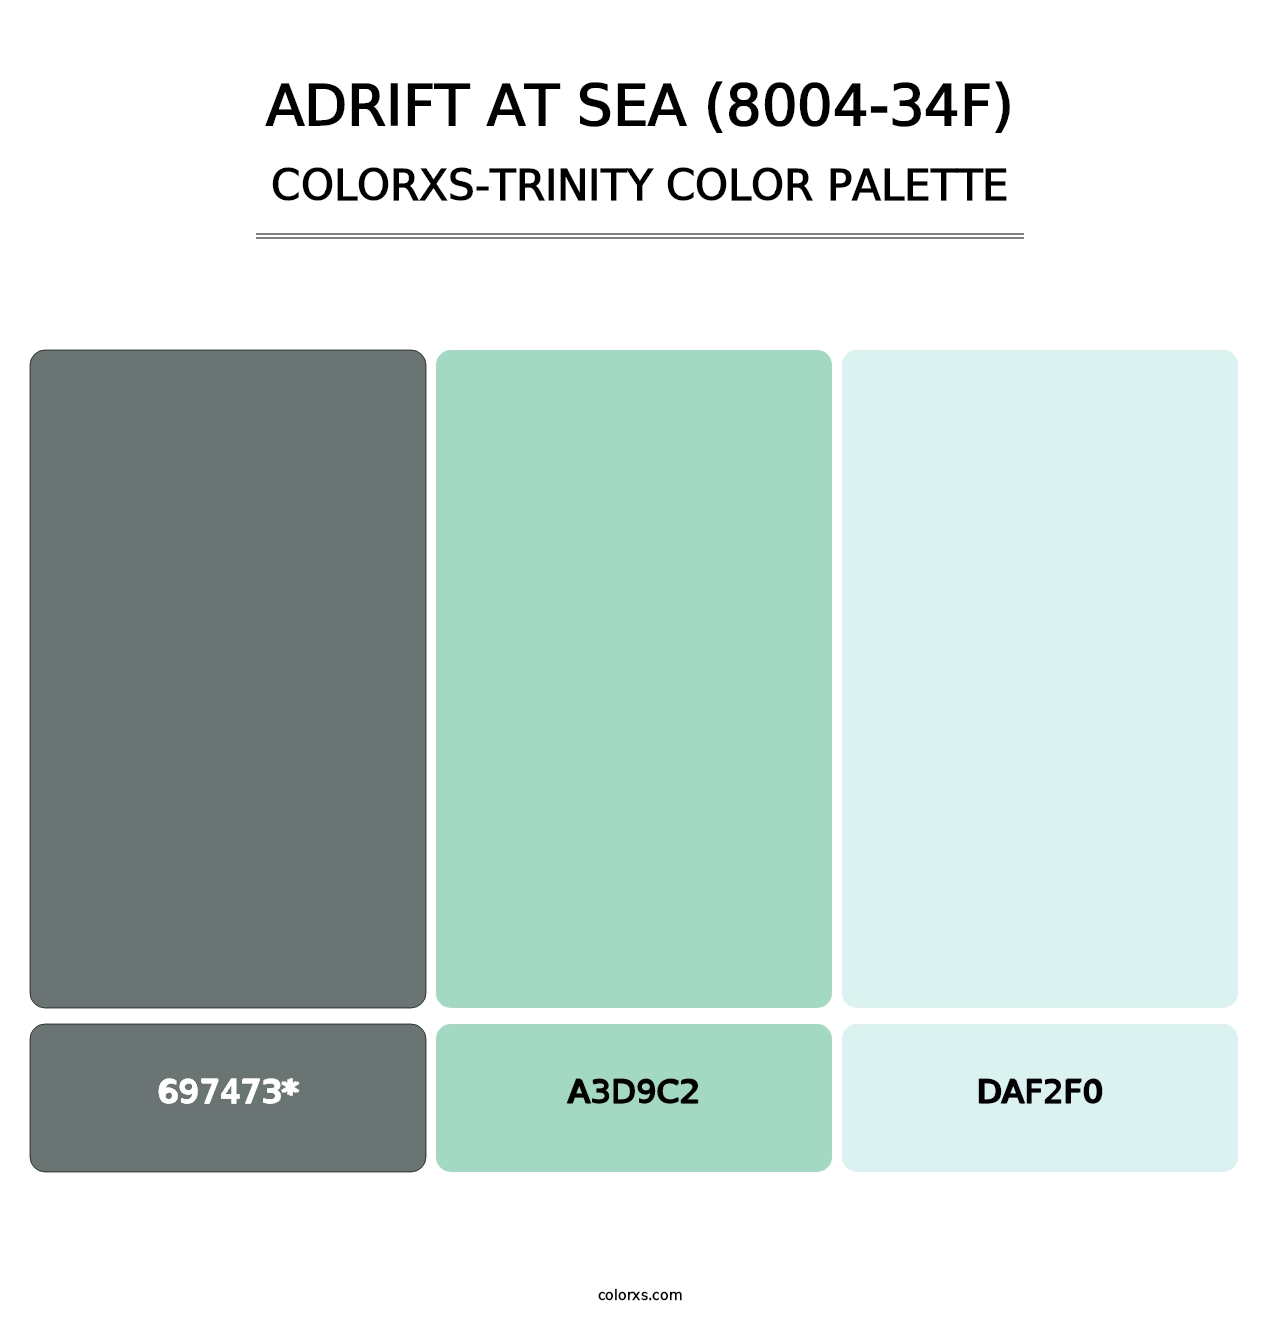 Adrift at Sea (8004-34F) - Colorxs Trinity Palette